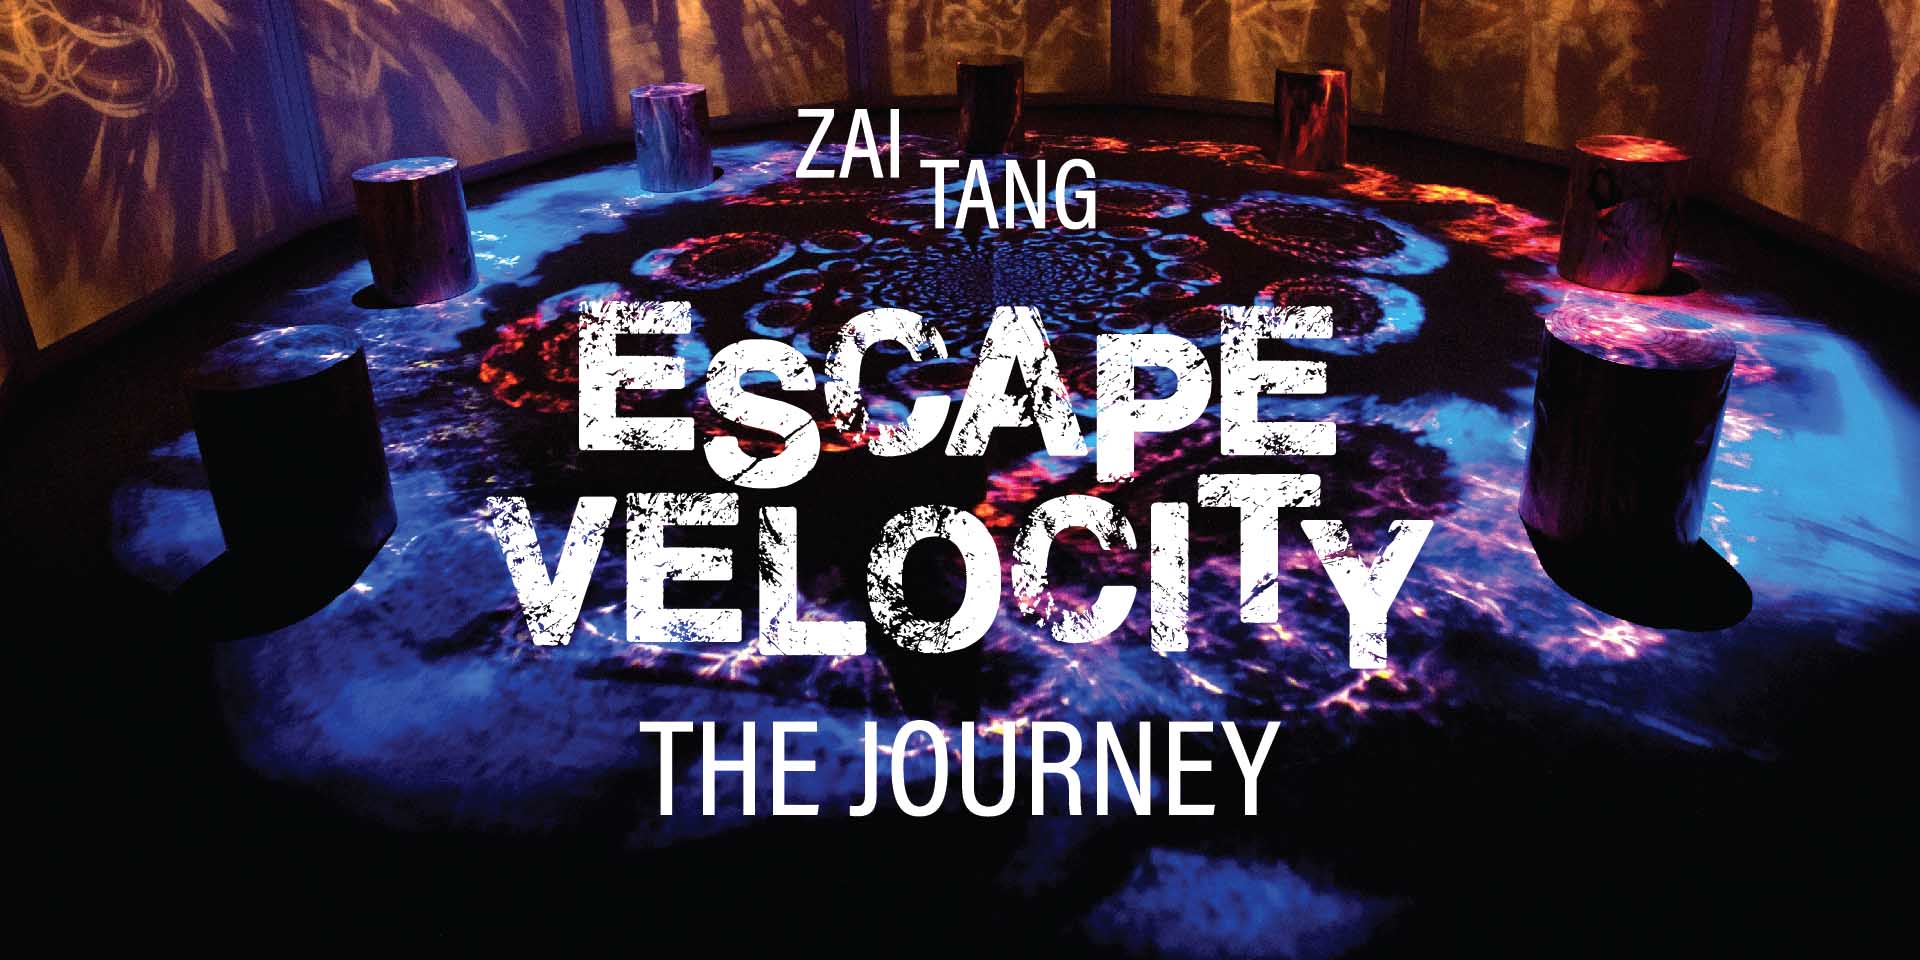 Escape Velocity: The Journey